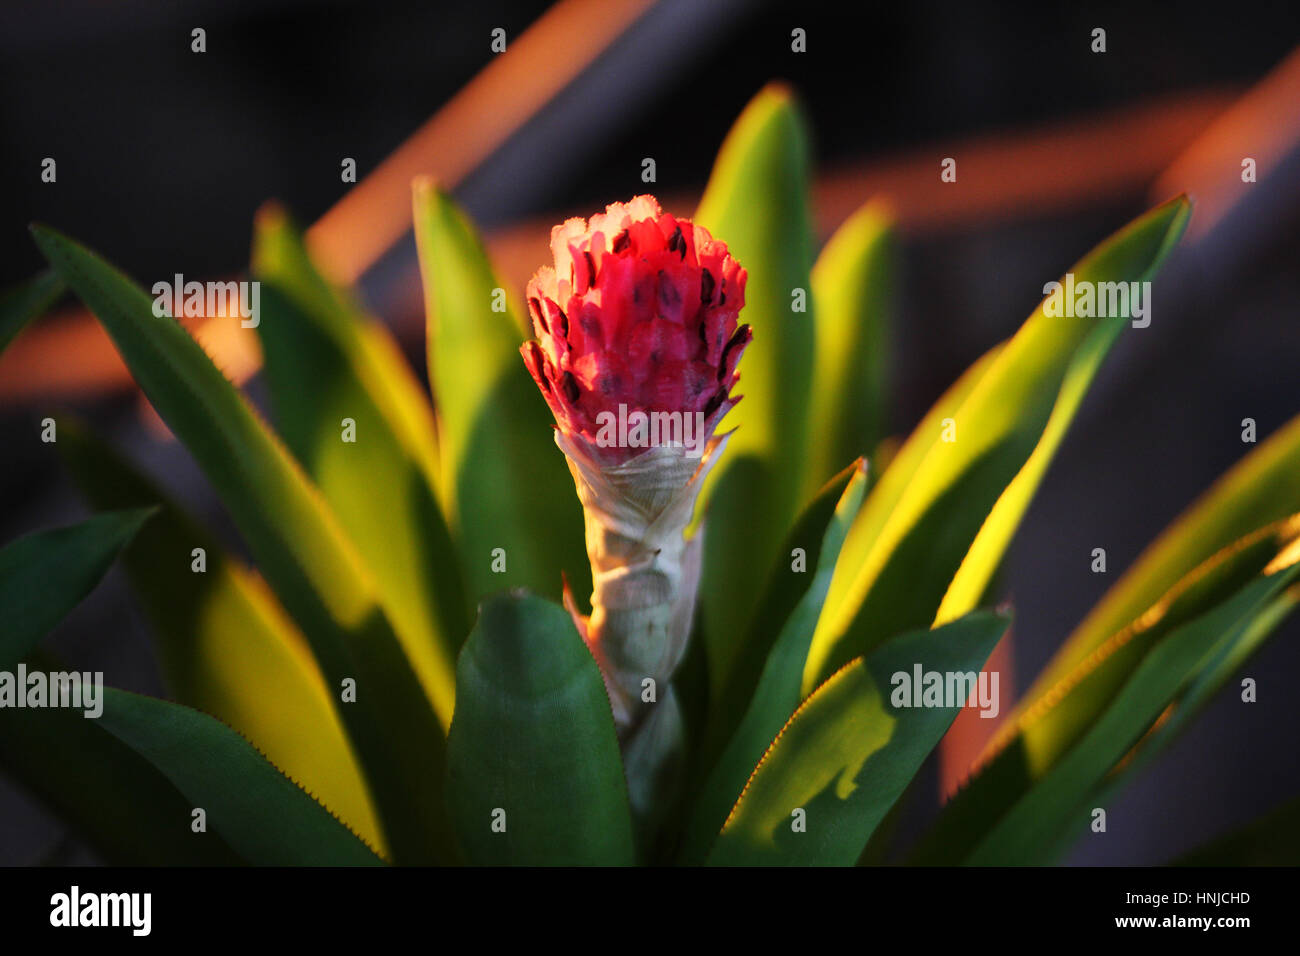 Bromeliad of Guzmania sp. is a member of monocot flowering plants. Stock Photo